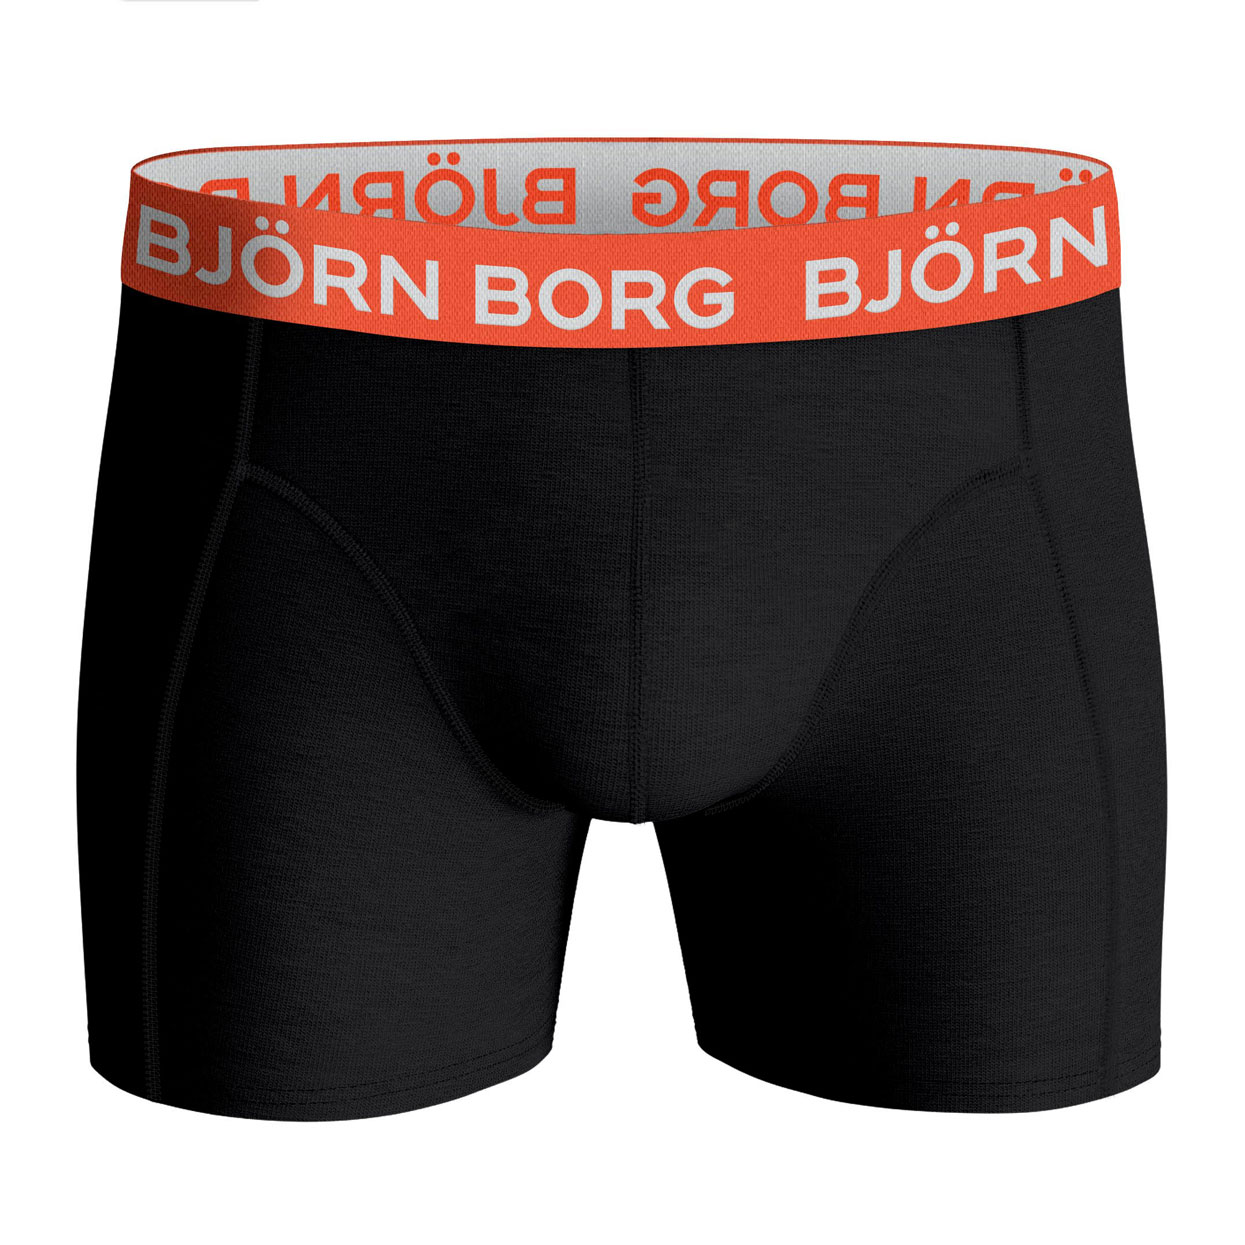 10001719-mp006-Bjorn-Borg-band